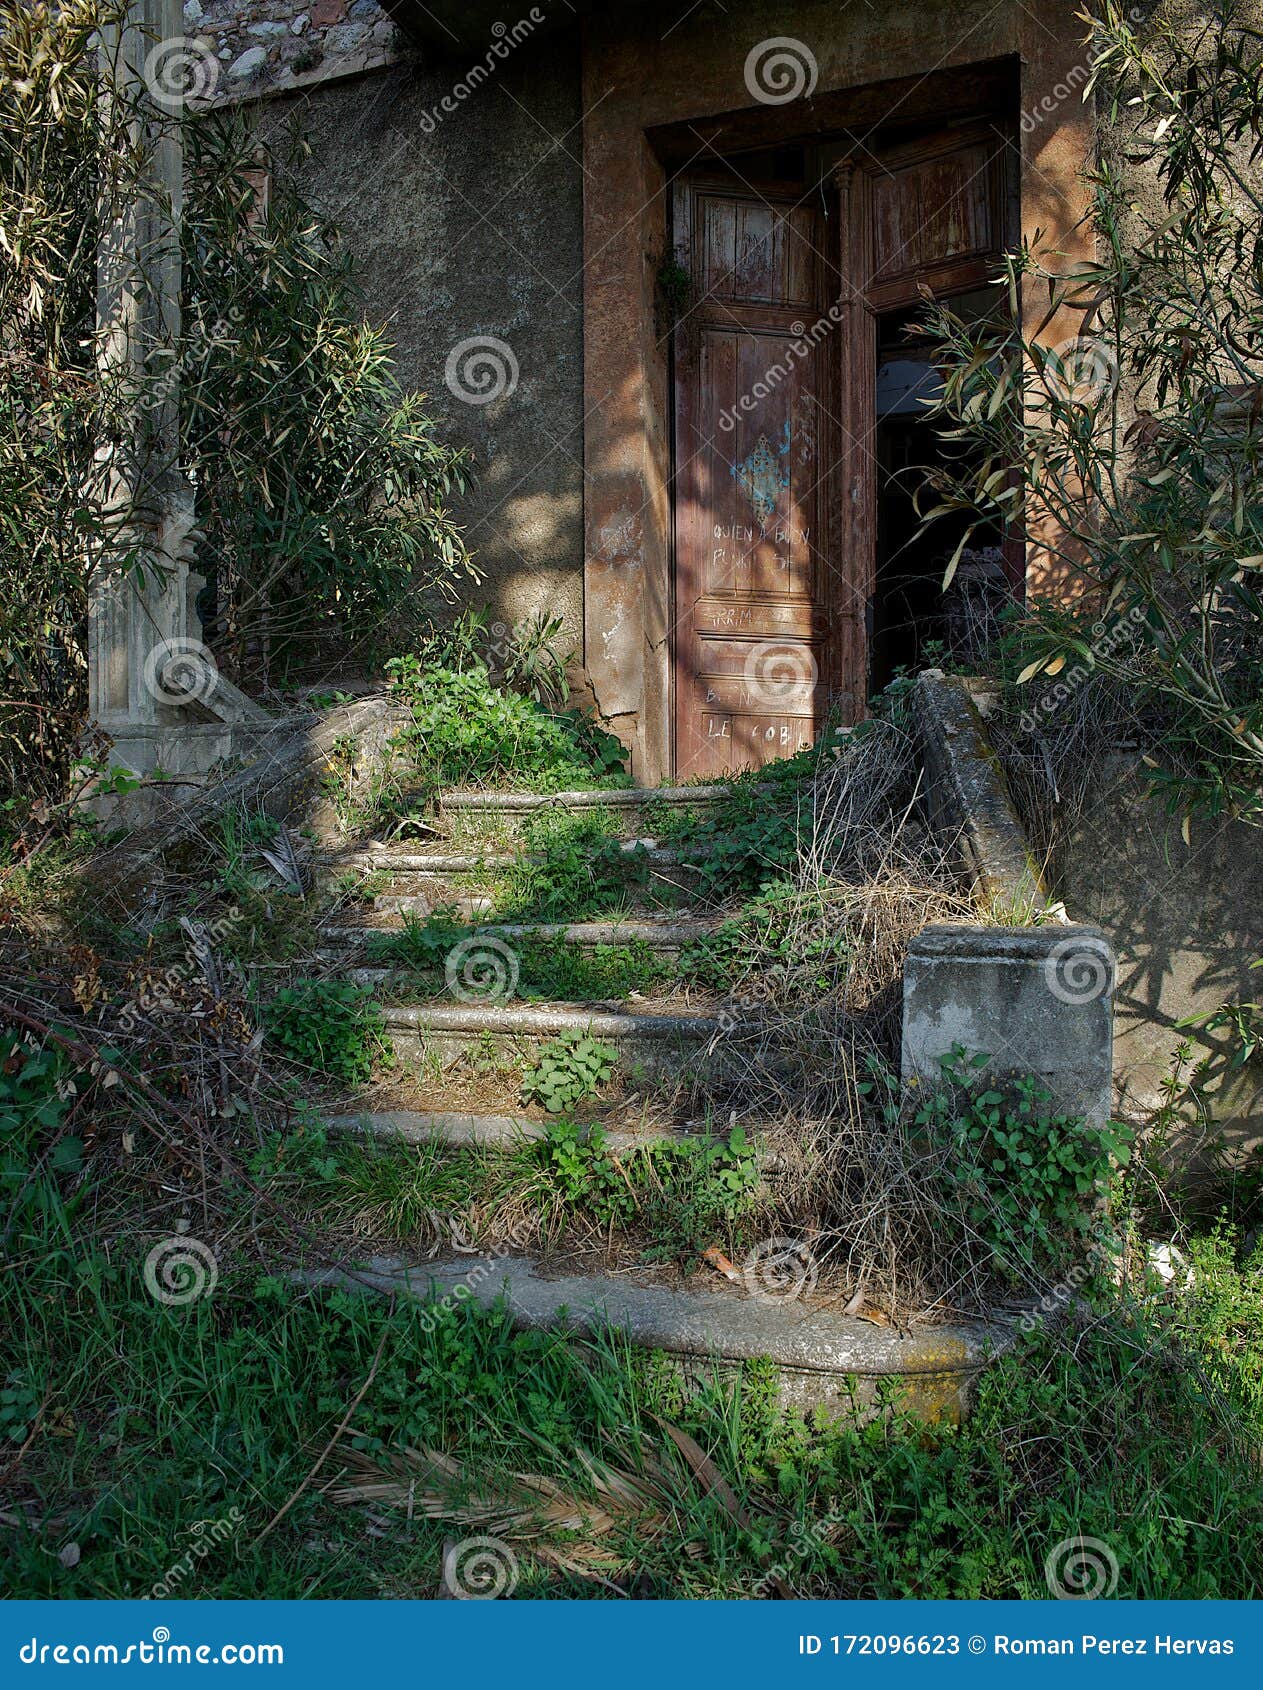 wooden door of an abandoned house